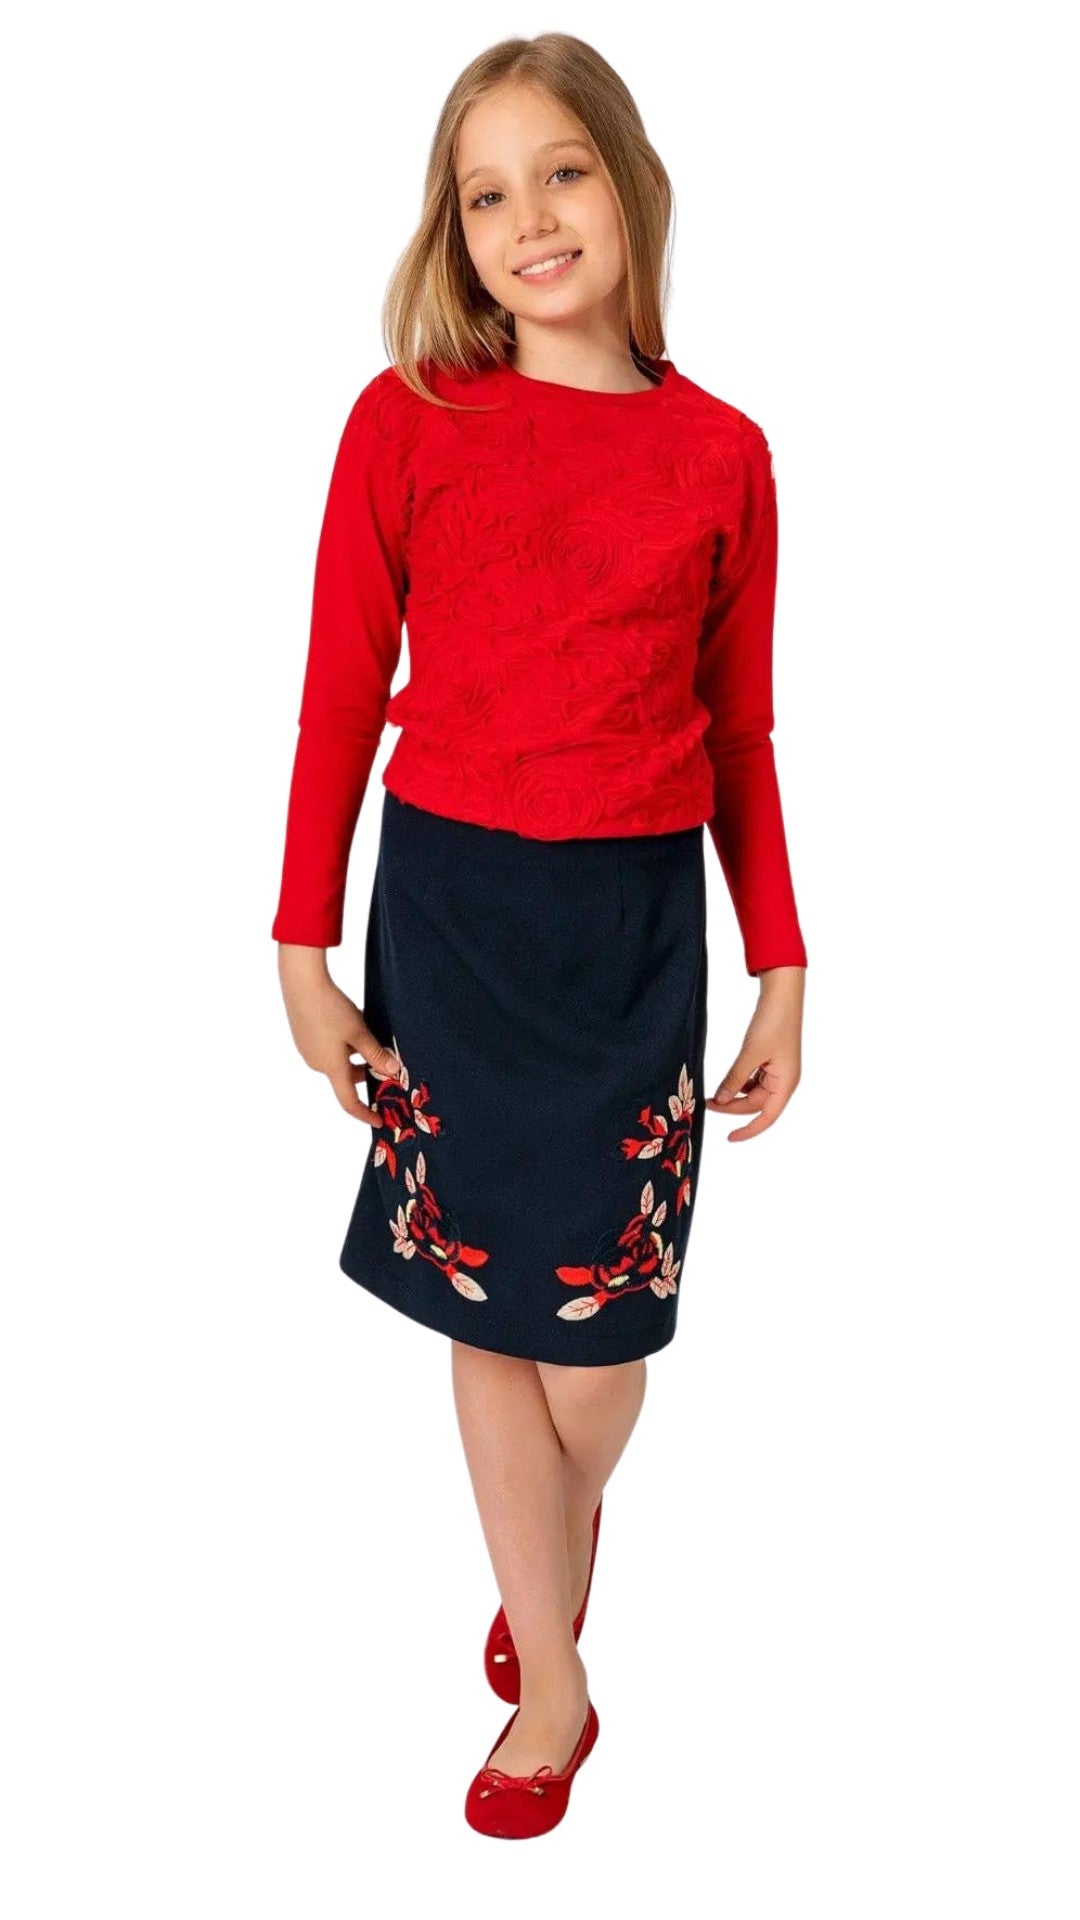 InCity Girls Tween 7-14 Years Navy Floral Myfair Fashion Skirt InCity Boys & Girls